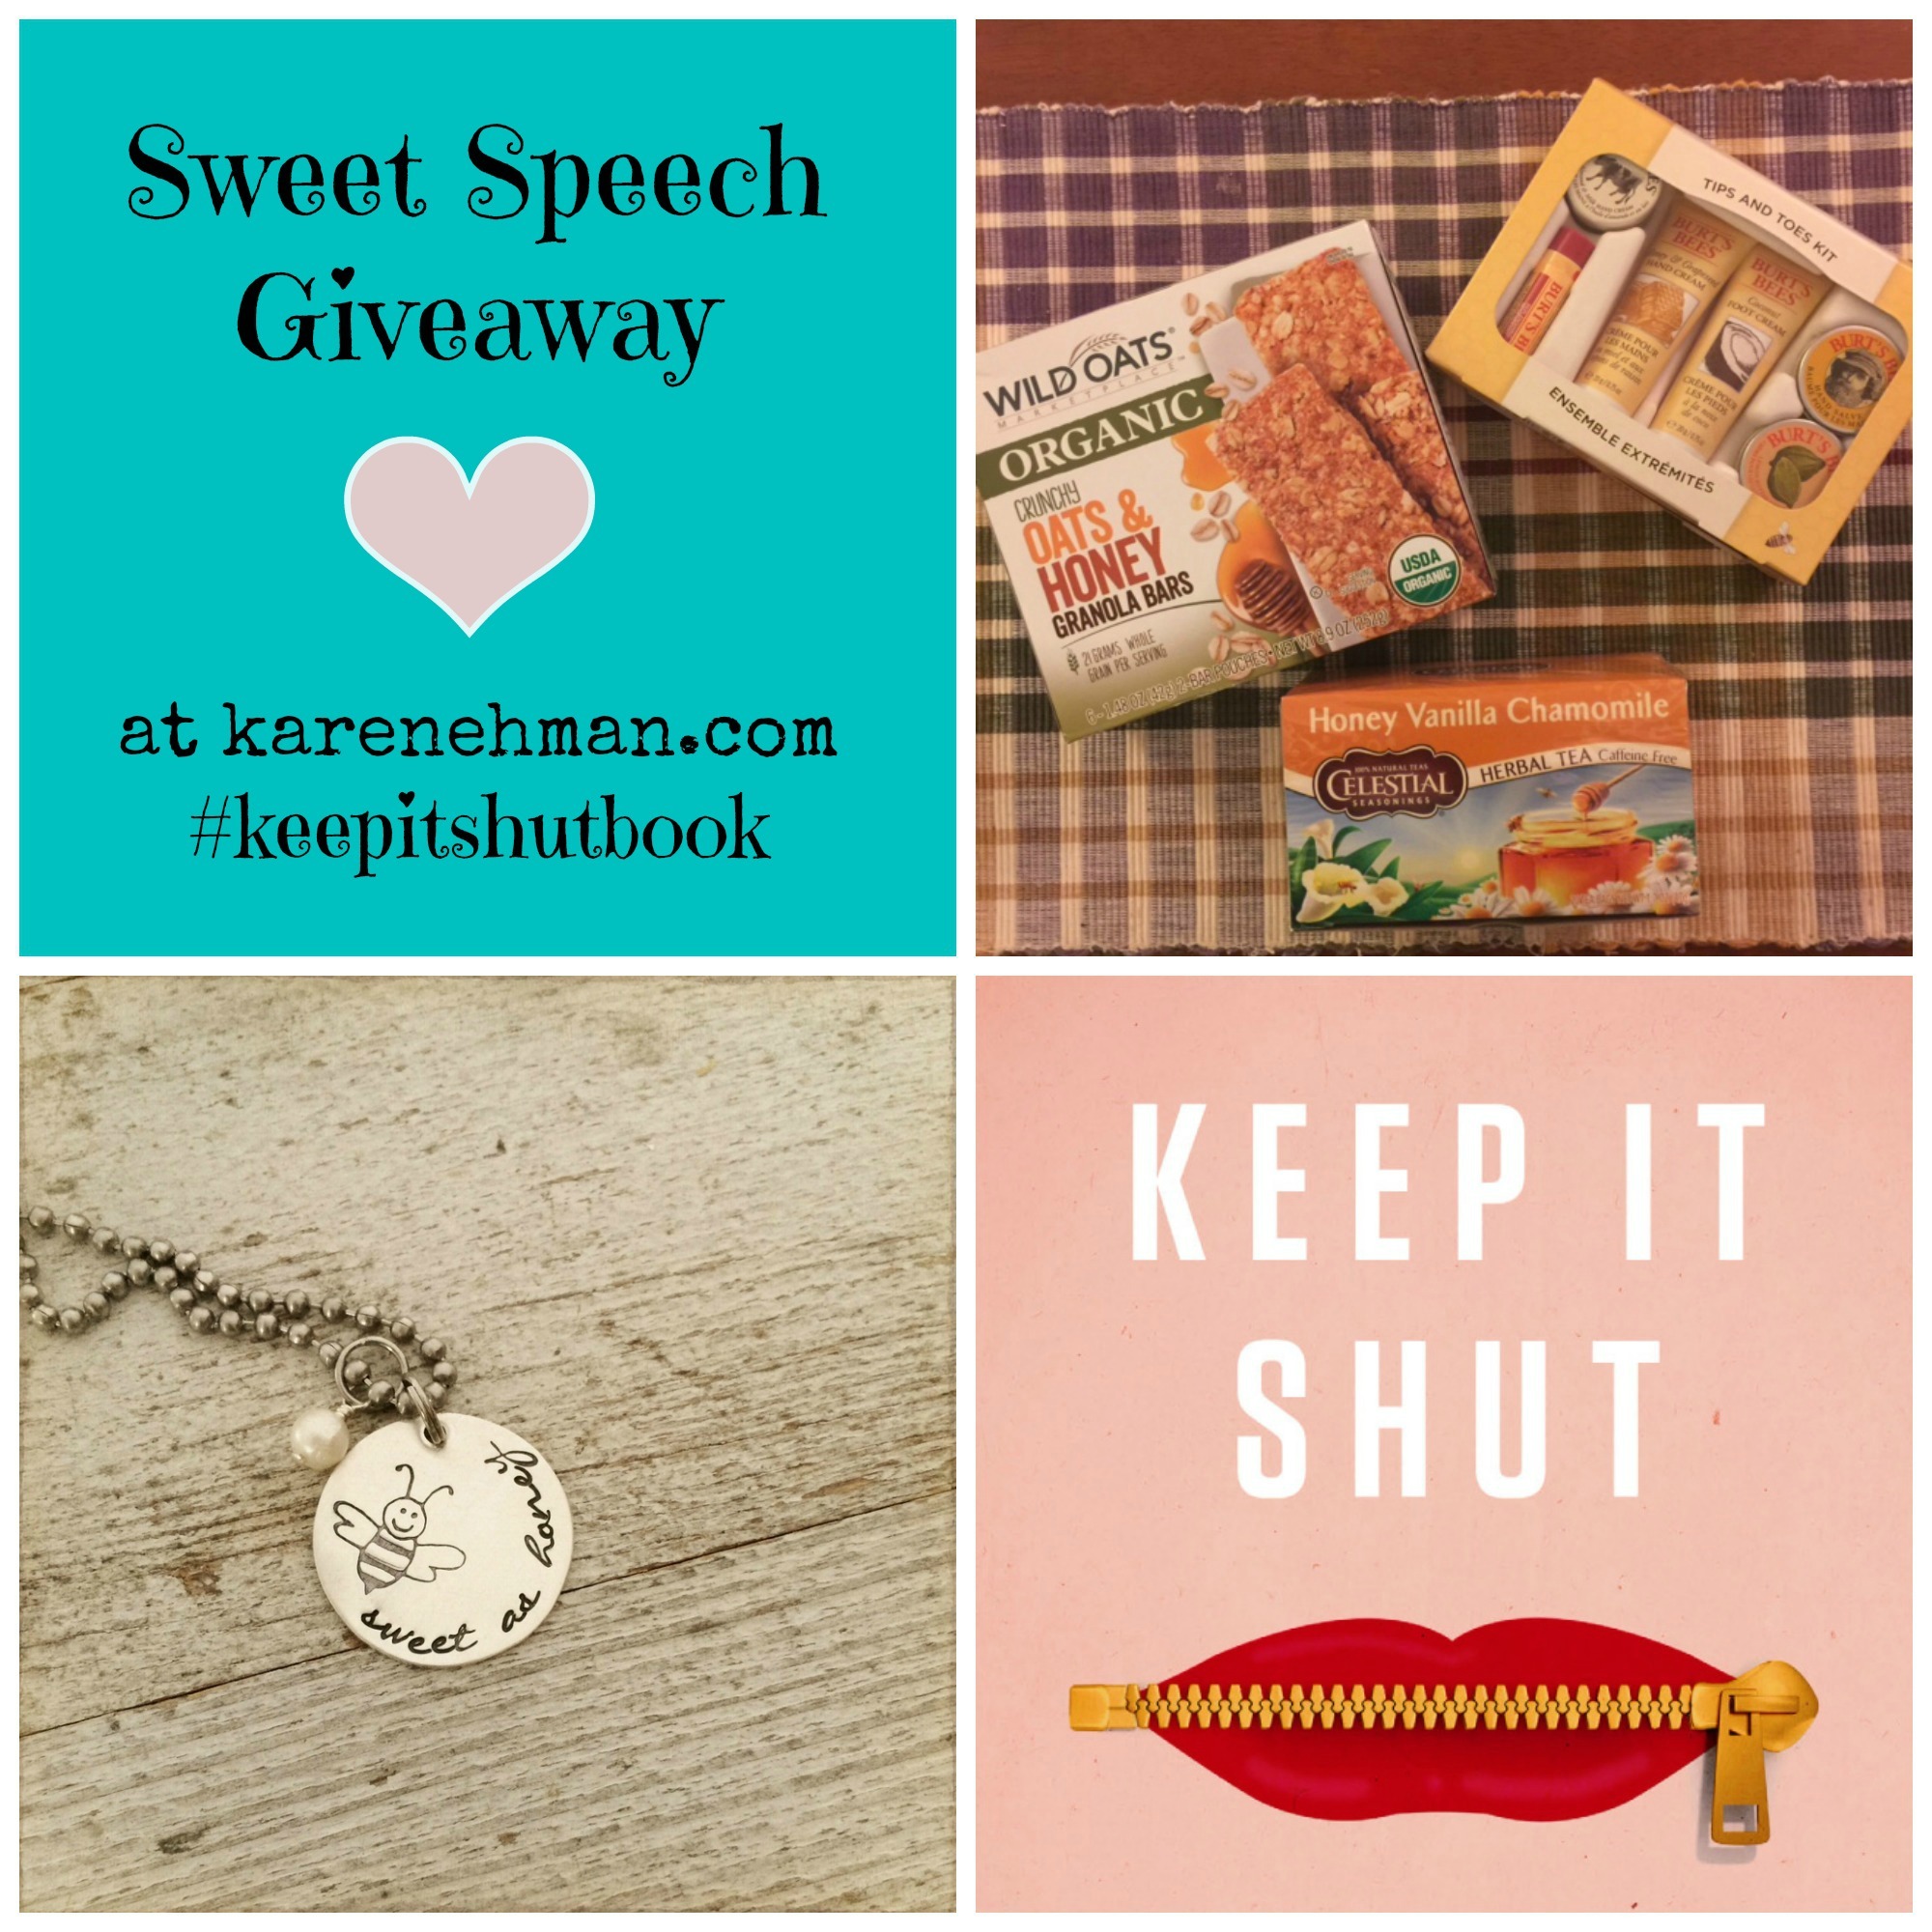 Sweet Speech giveaway at karenehman.com #keepitshutbook